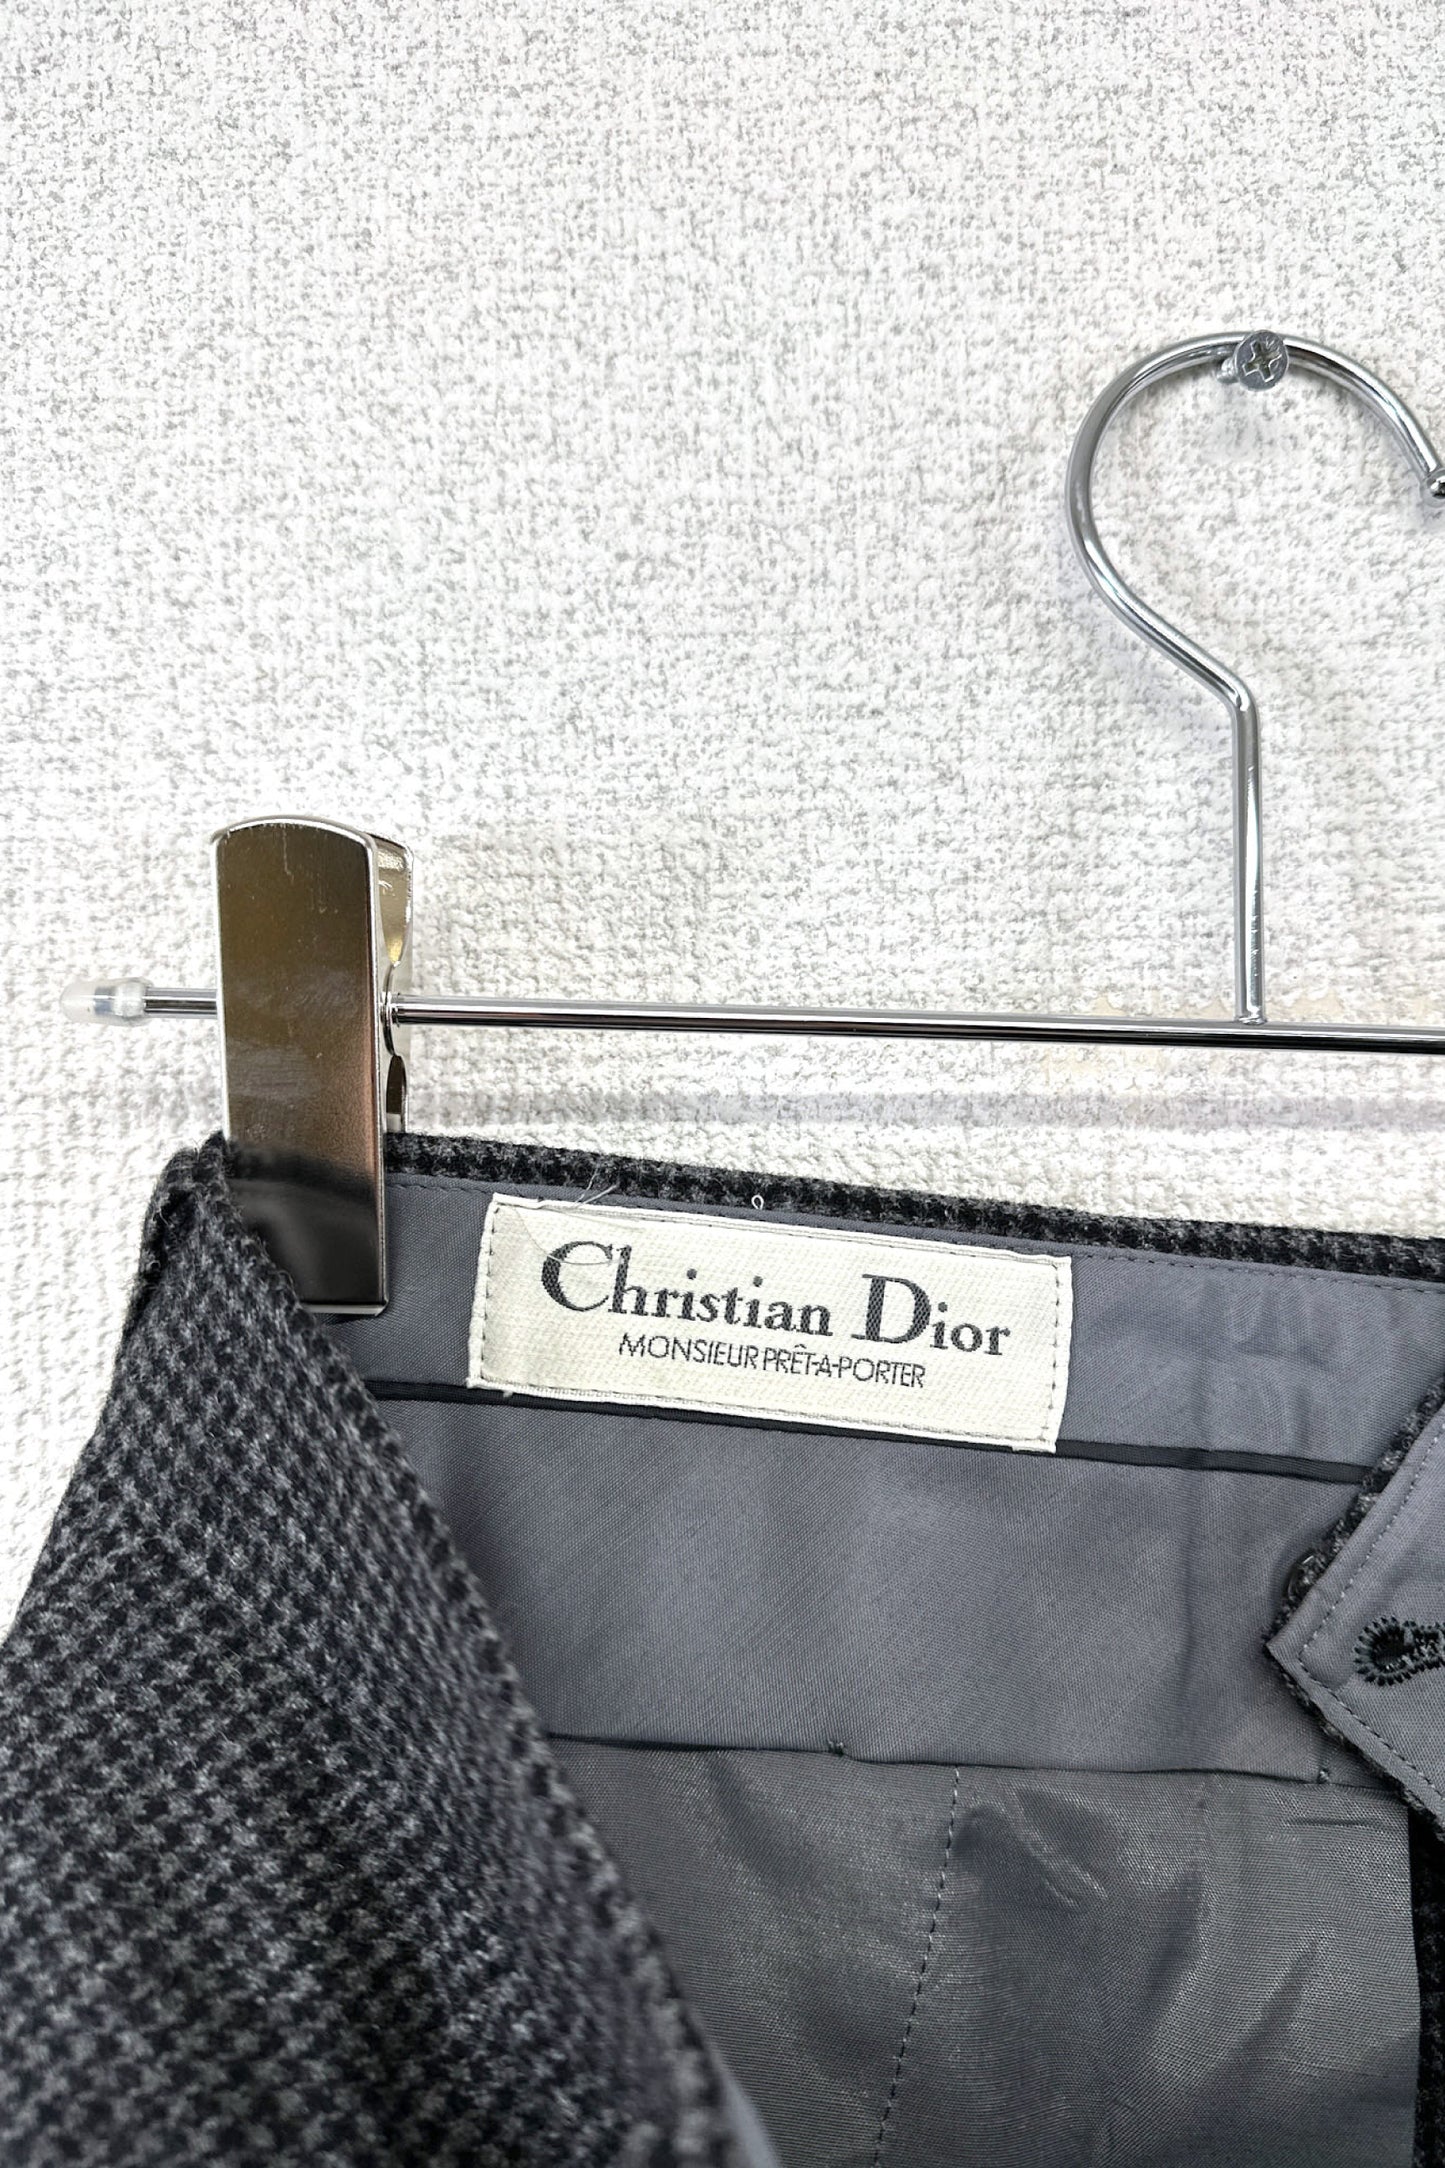 Christian Dior / PRET-A-PORTER  サイズMプレタポルテ